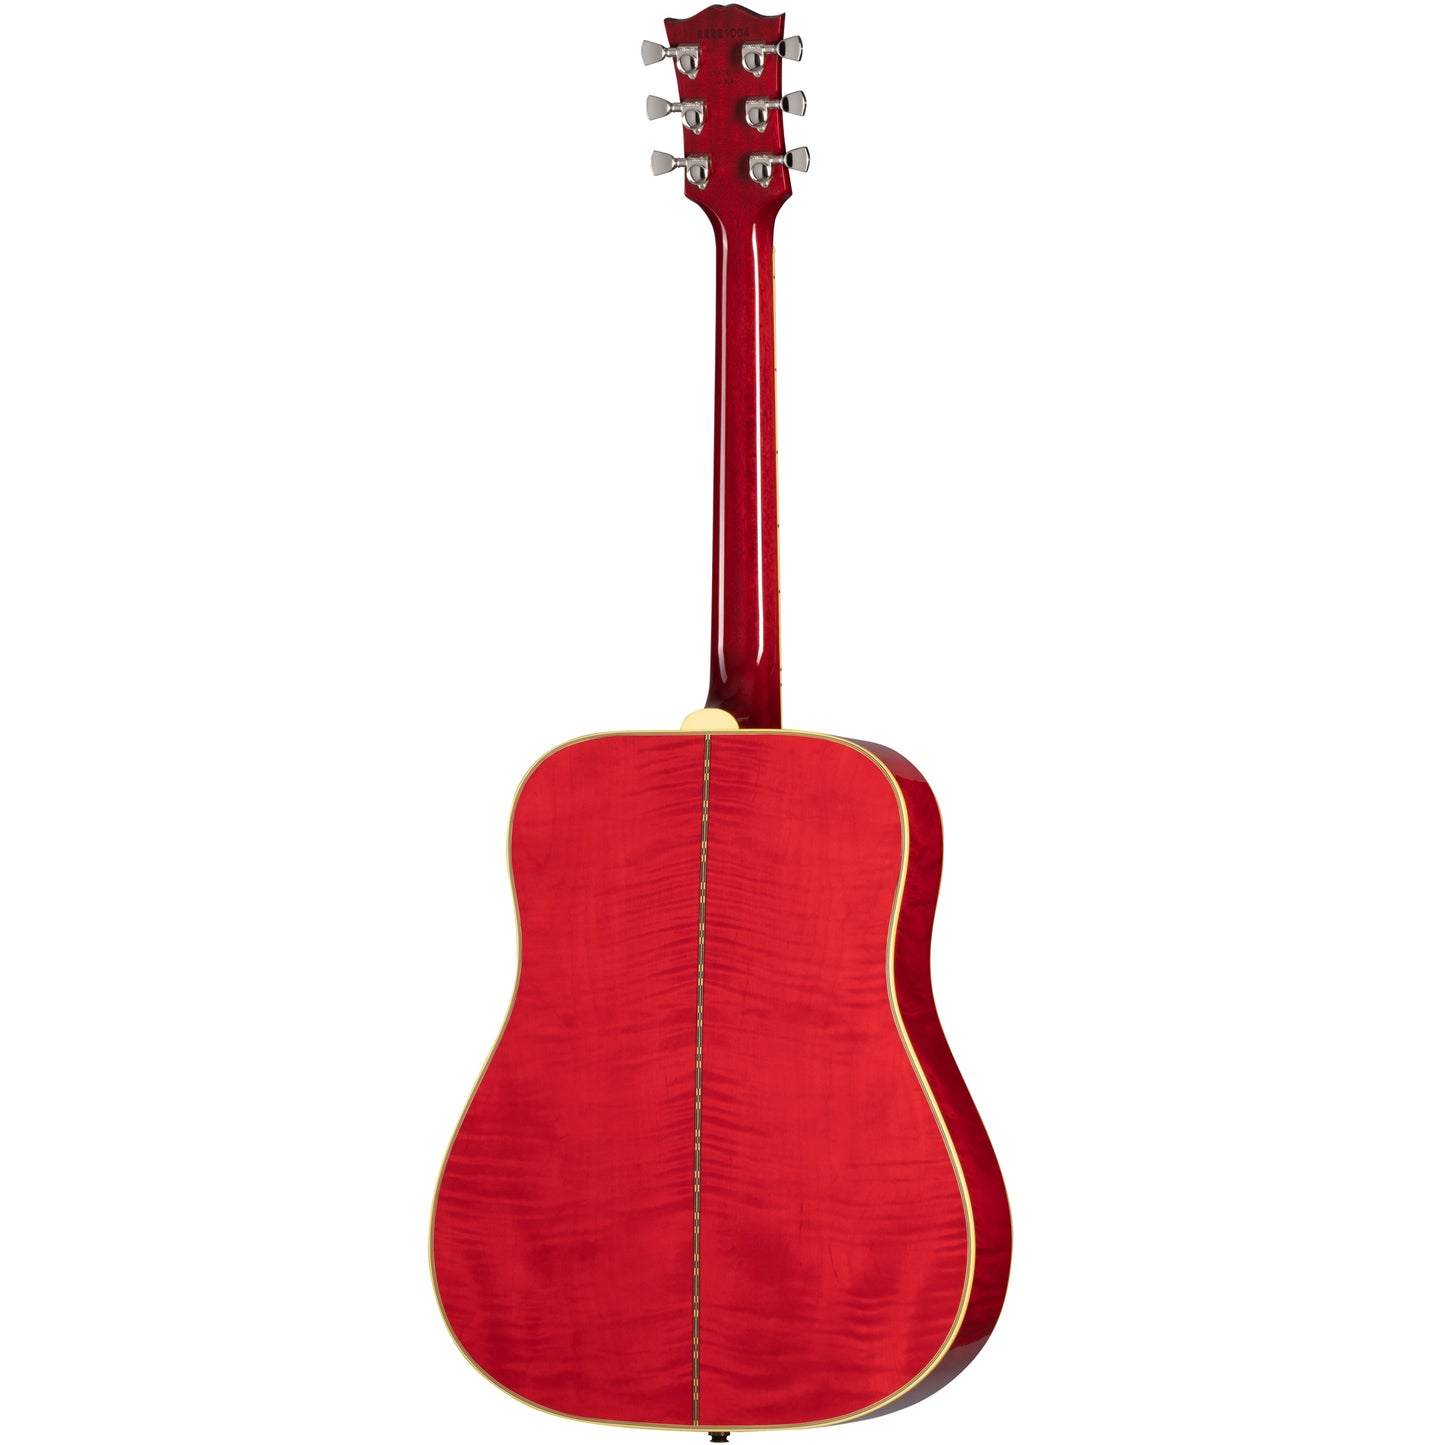 Gibson Dove Original Acoustic Electric Guitar - Vintage Cherry